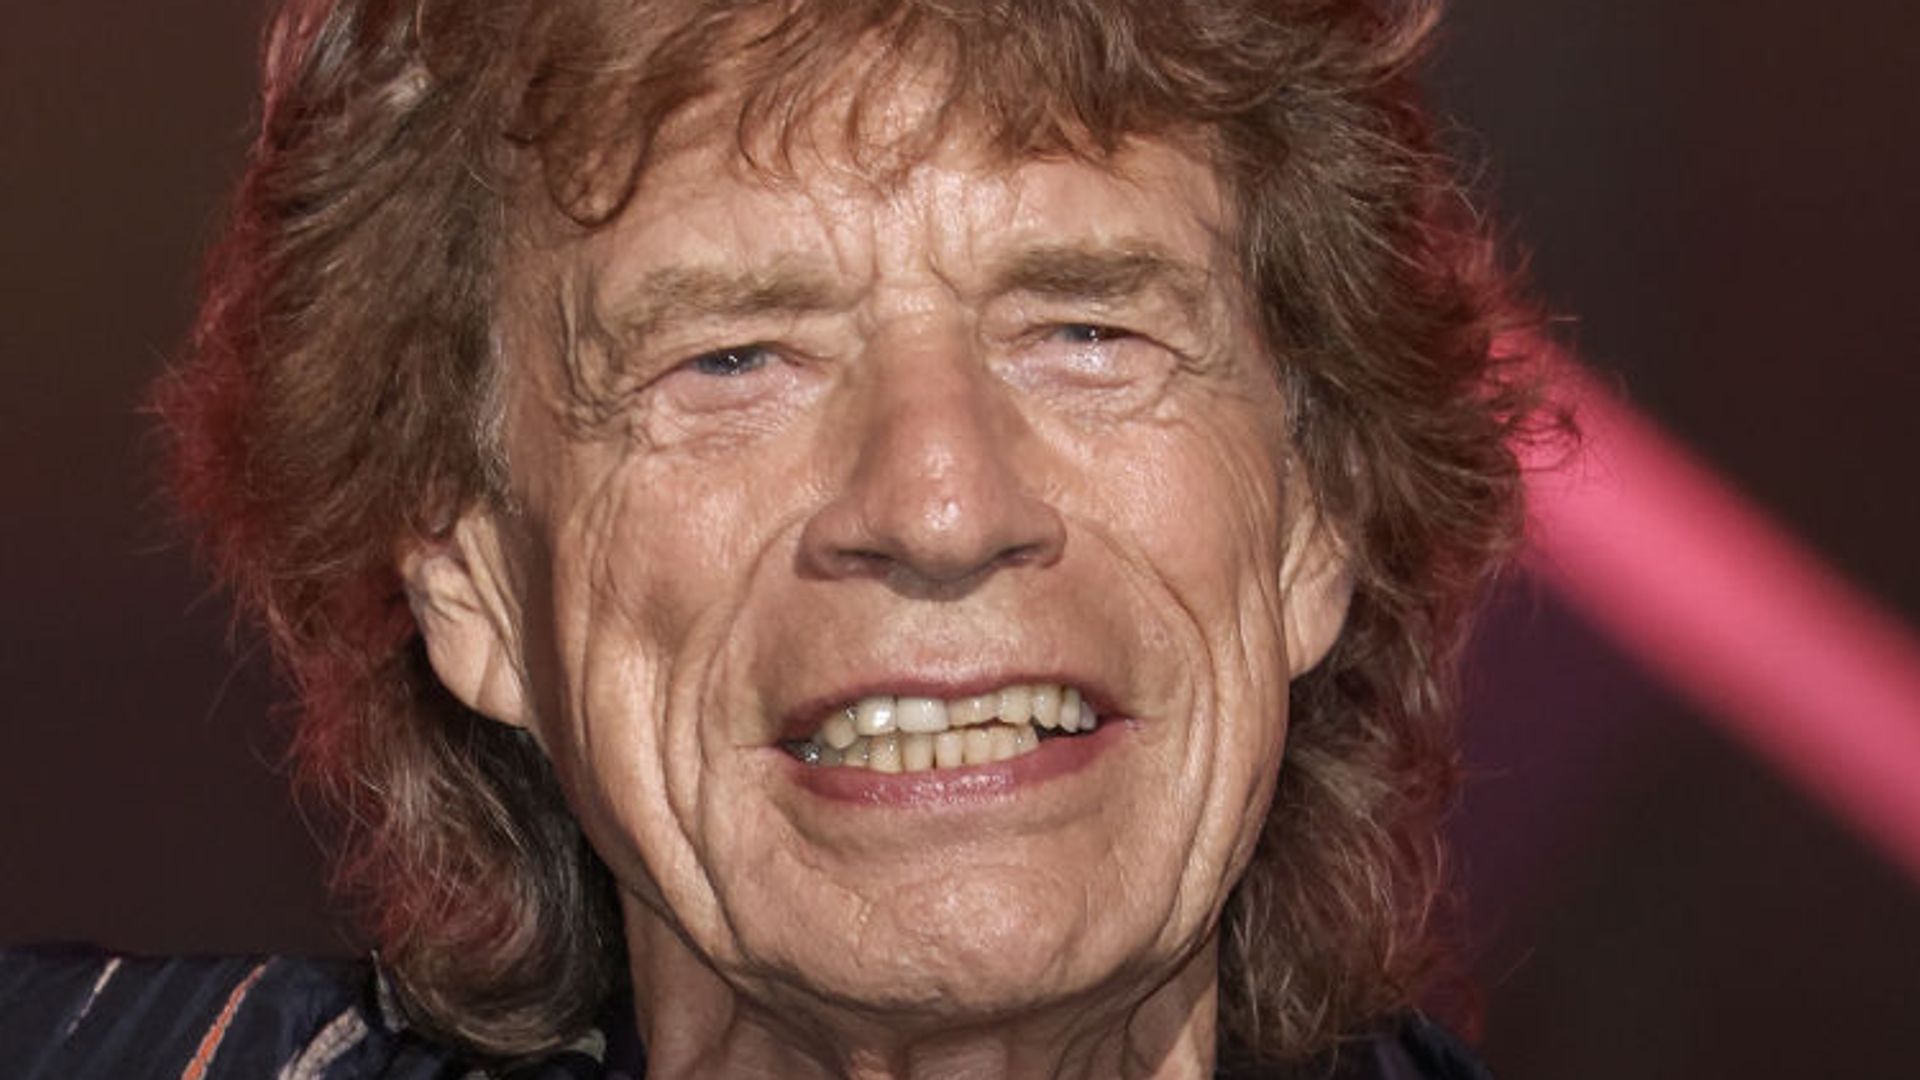 Mick Jagger - Biography | HELLO!